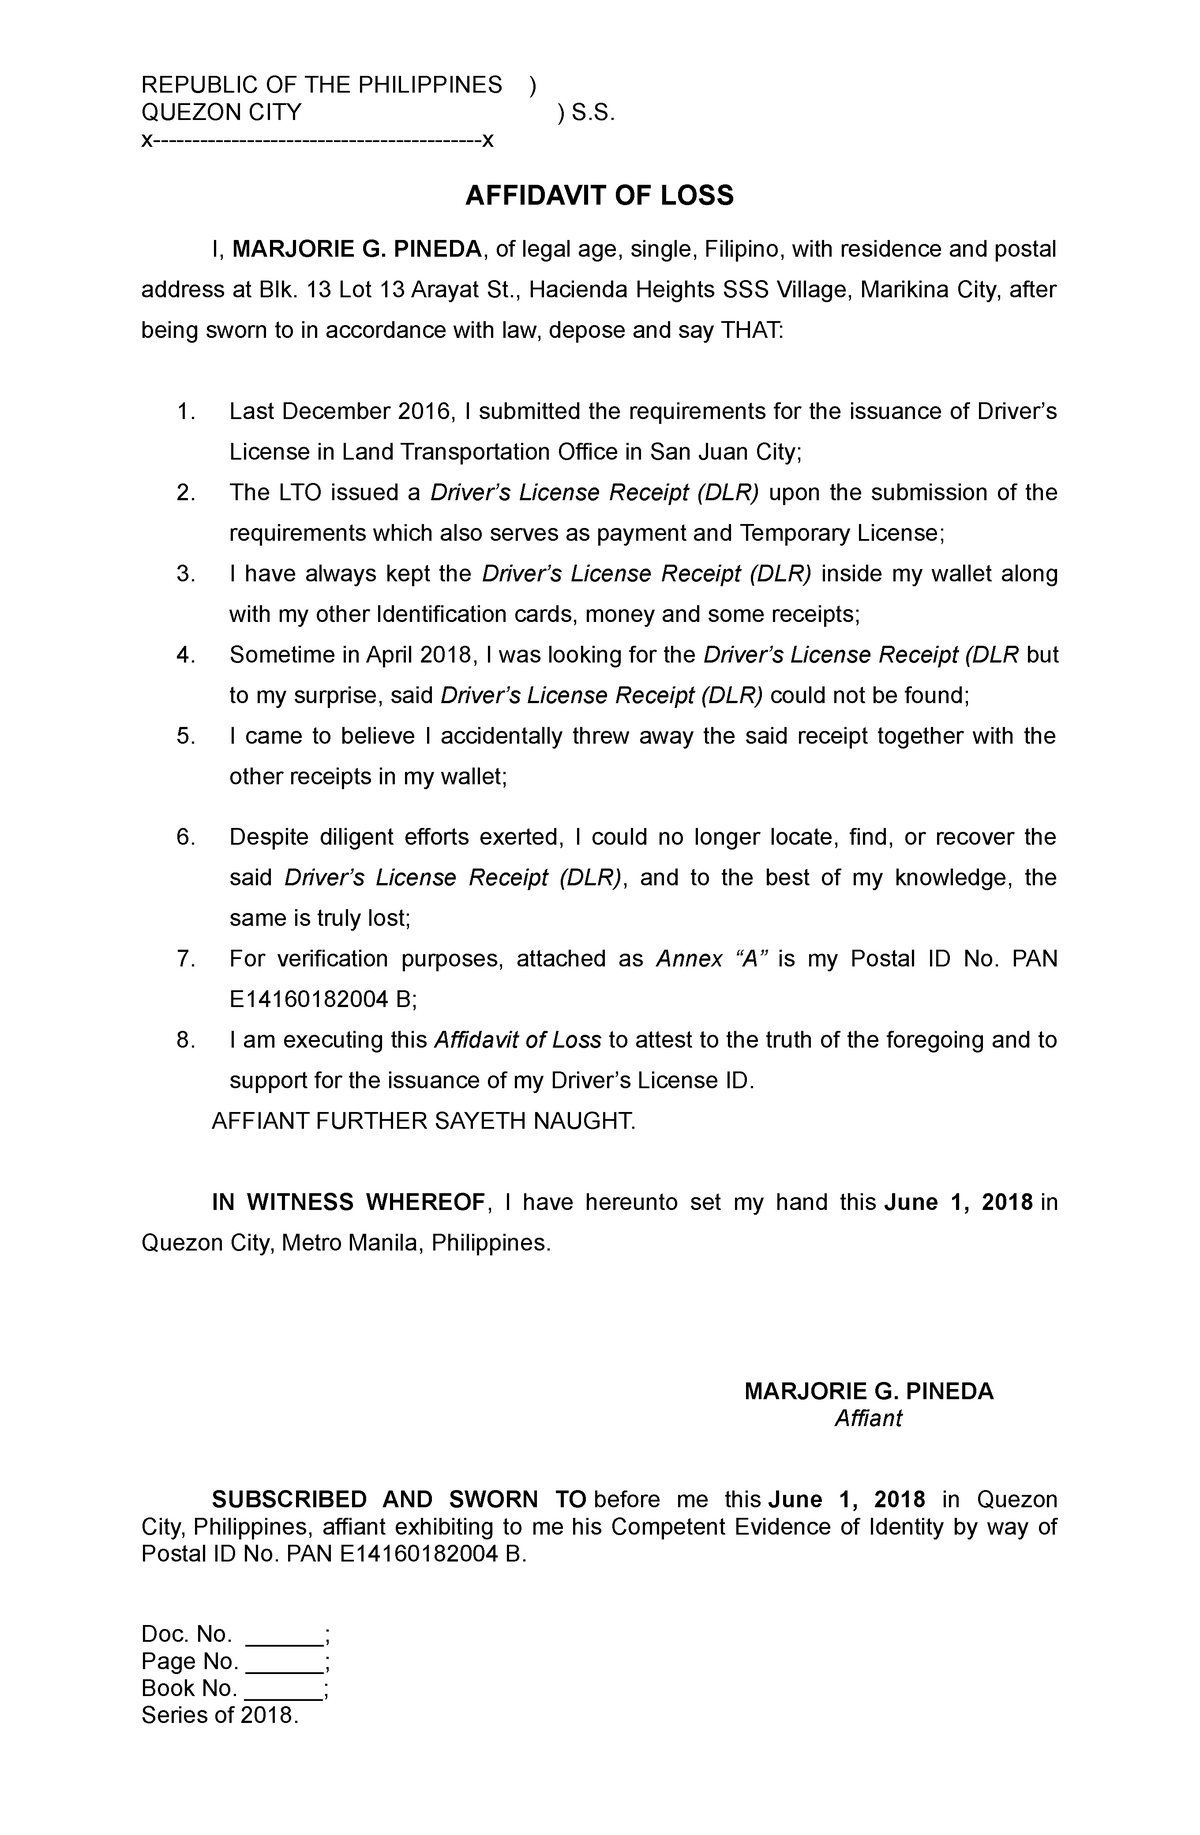 affidavit-of-loss-lto-license-receipt-republic-of-the-philippines-quezon-city-s-x-x